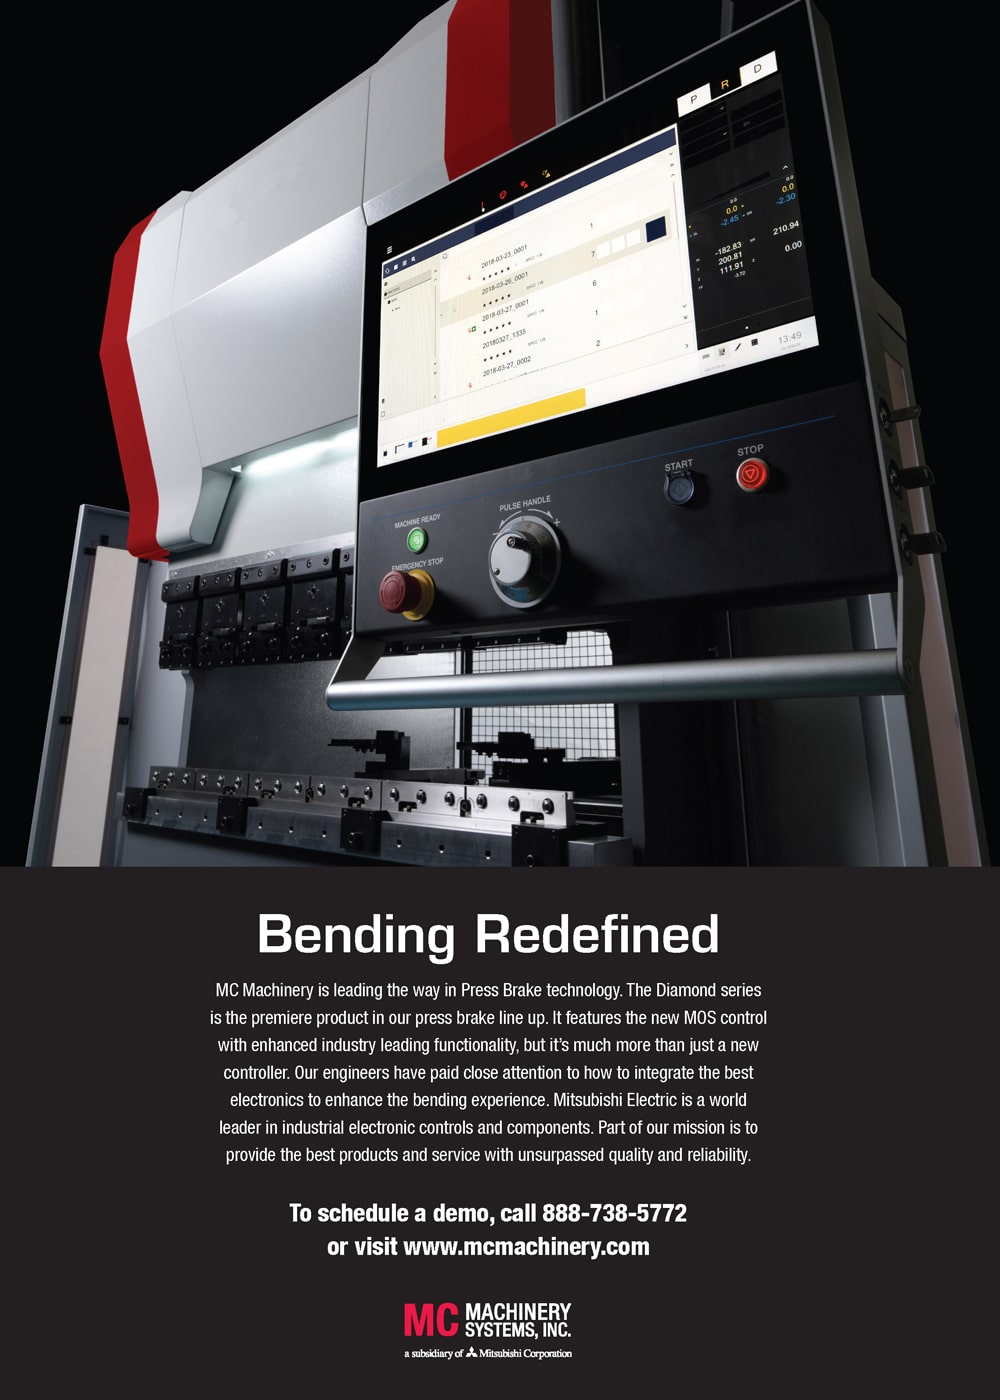 FF Journal Advertisement: Machinery Systems, Inc